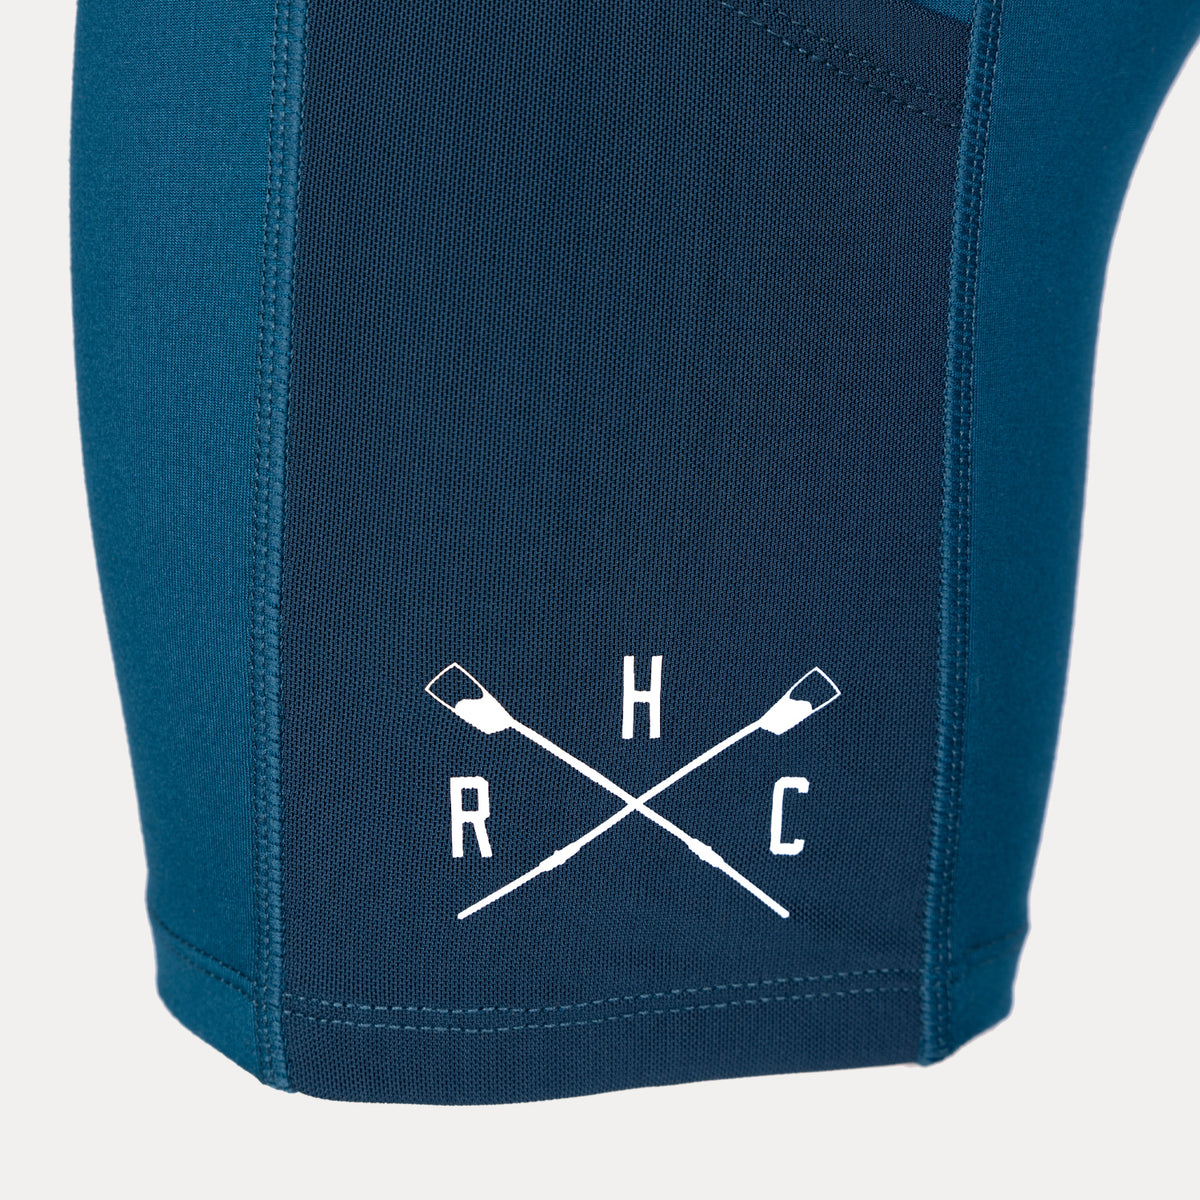 detail photo of rhc crossed oar logo on left leg mesh pocket. 